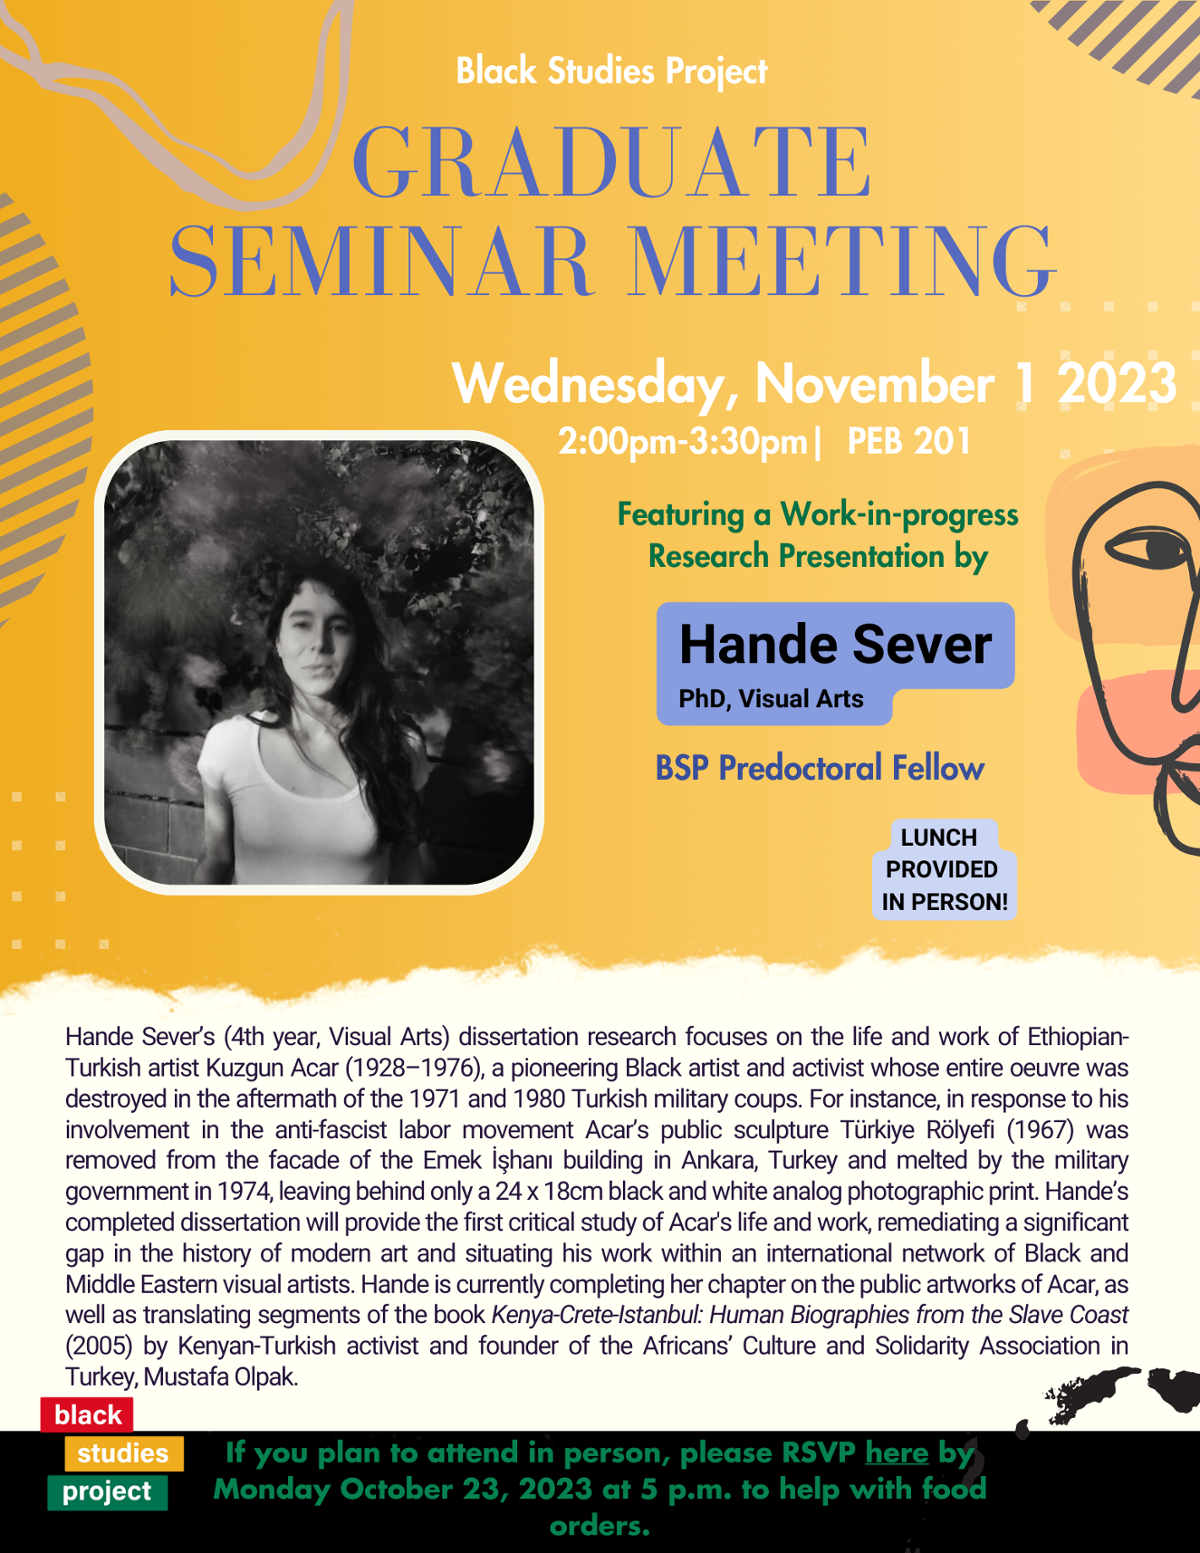 Flier bearing Hande Sever's image and text describing the presentation topic